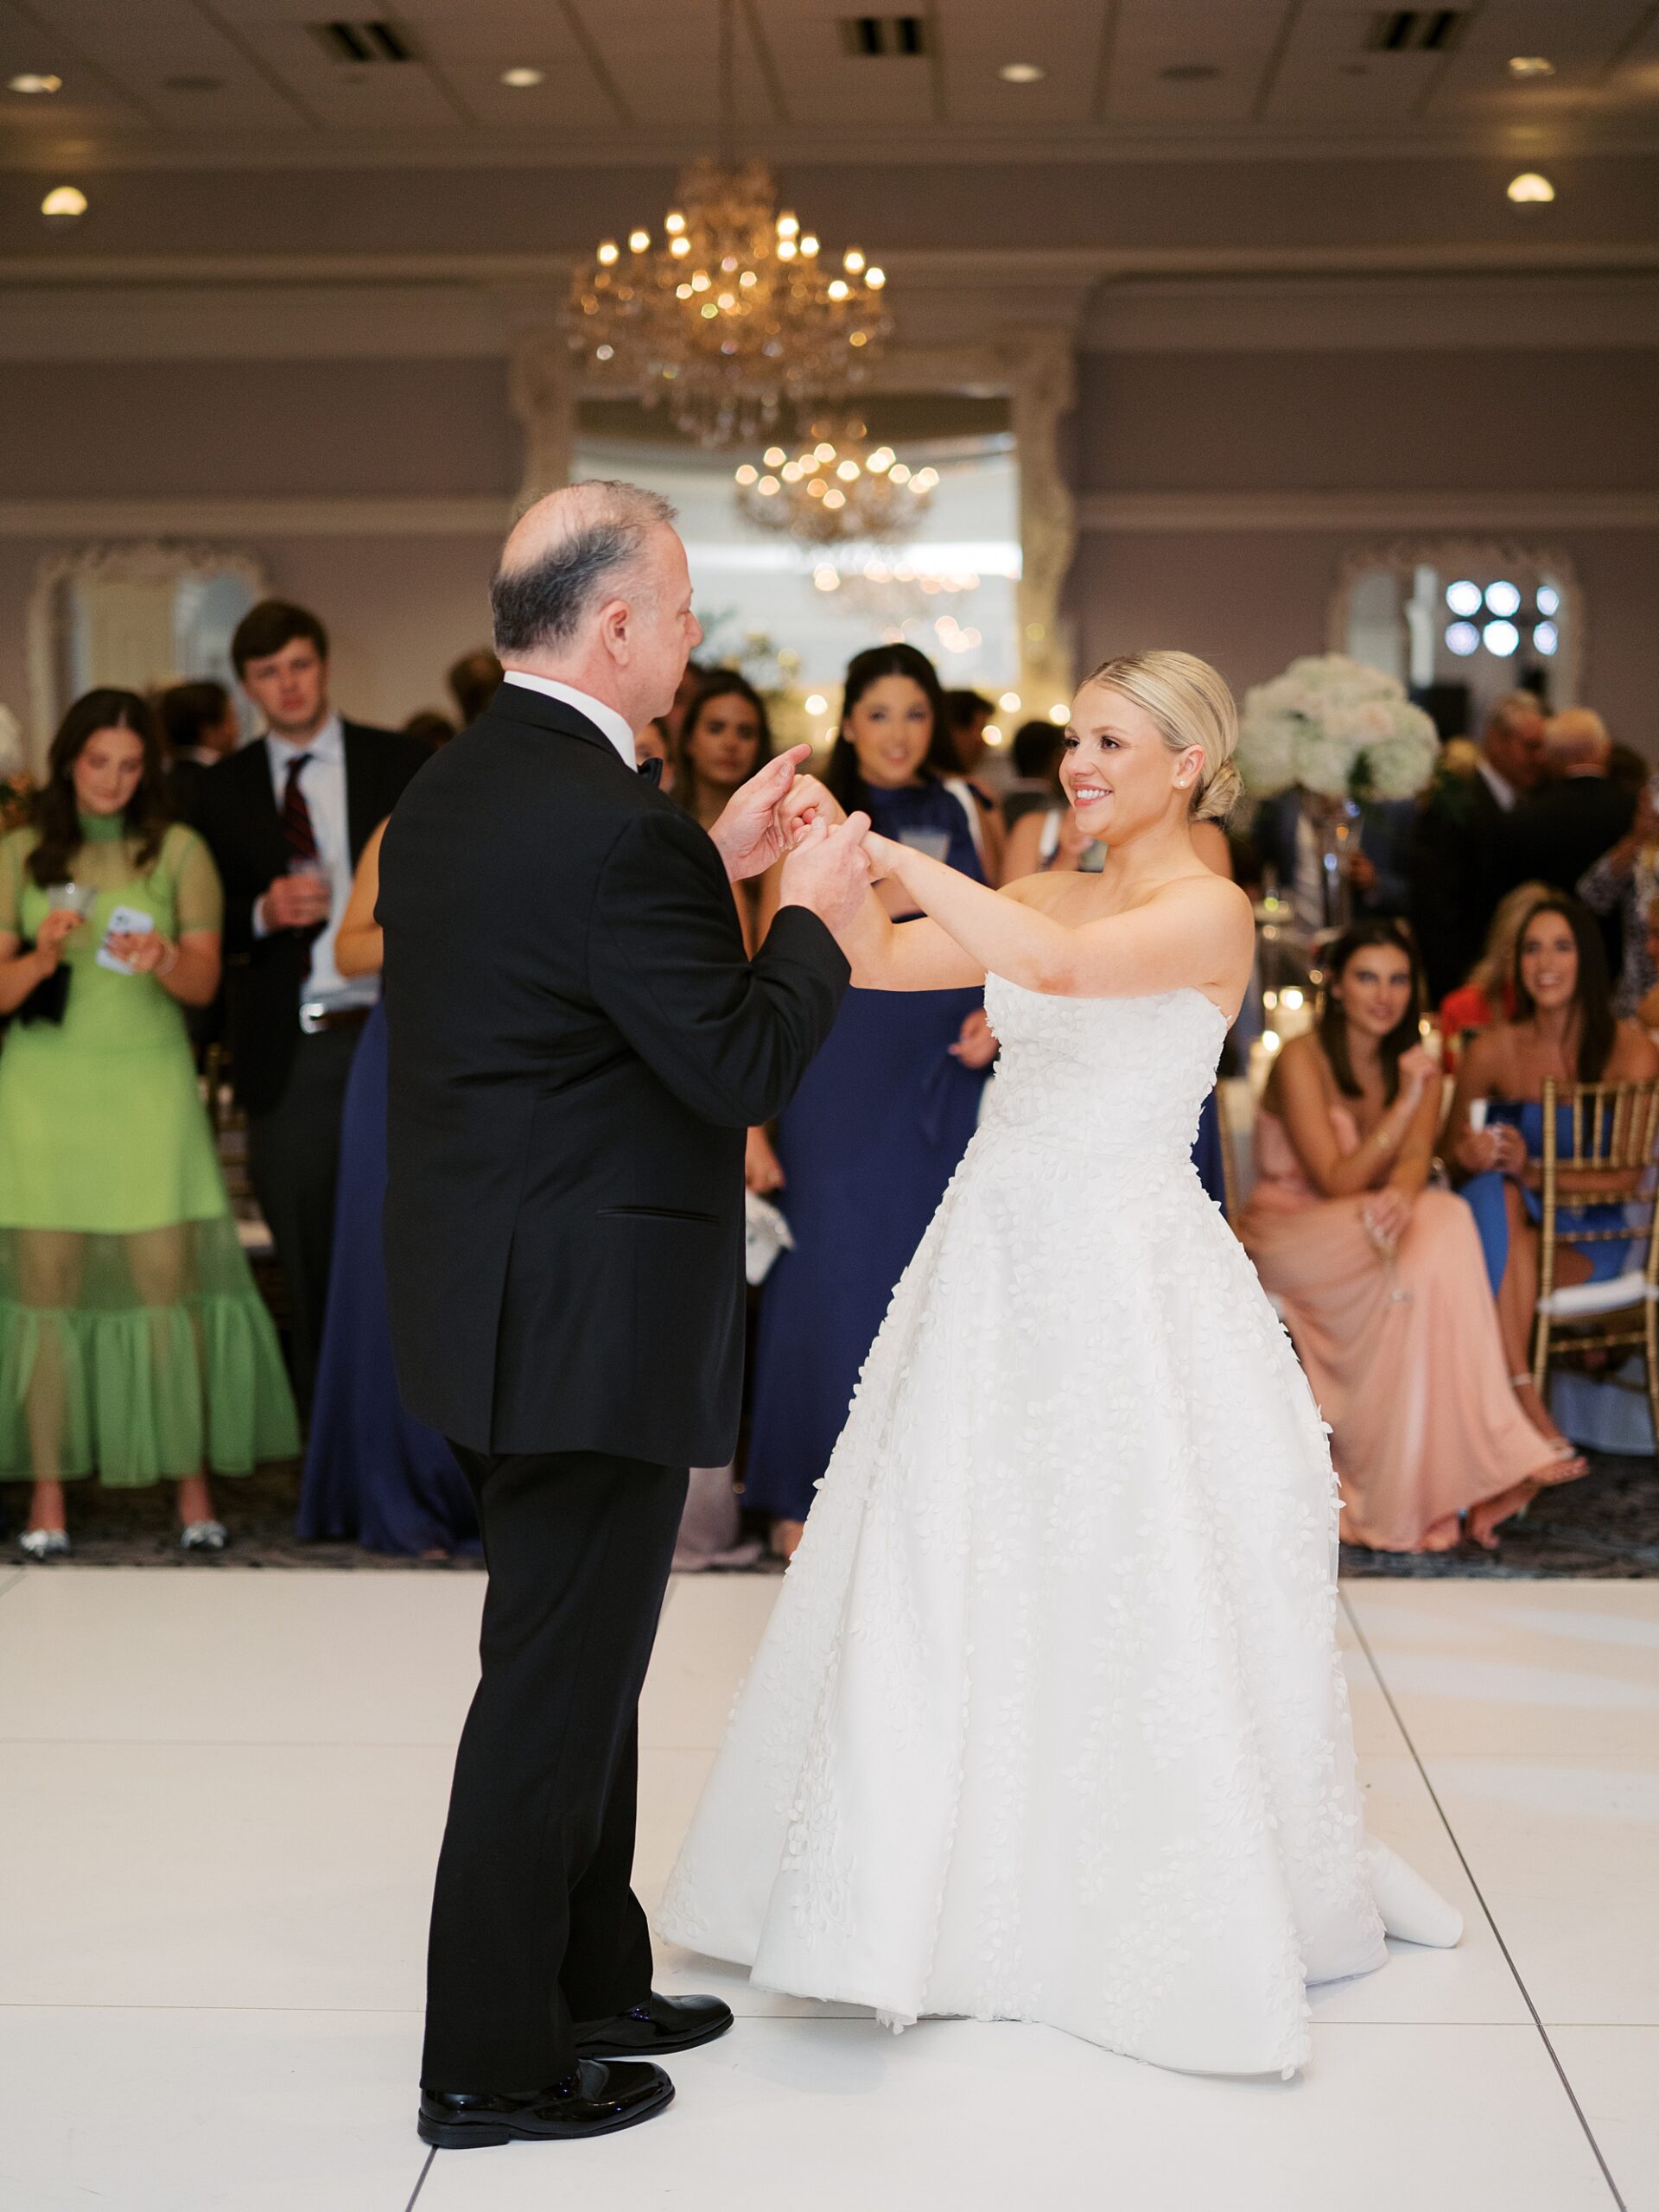 groom twirls bride during dance during wedding reception in Lafayette LA